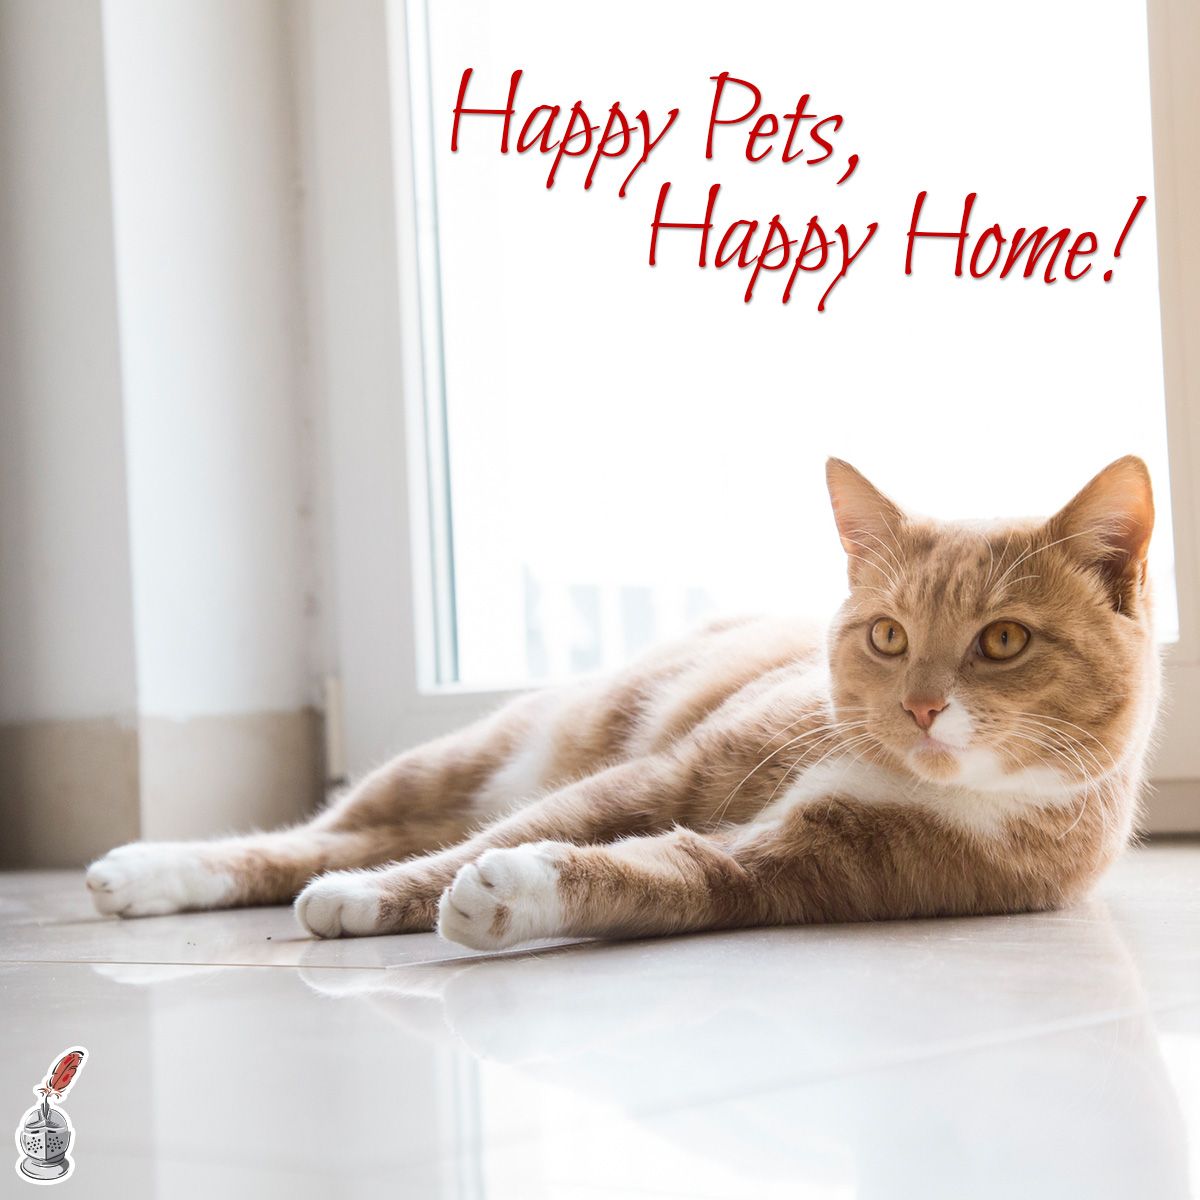 Happy Pets, Happy Home!